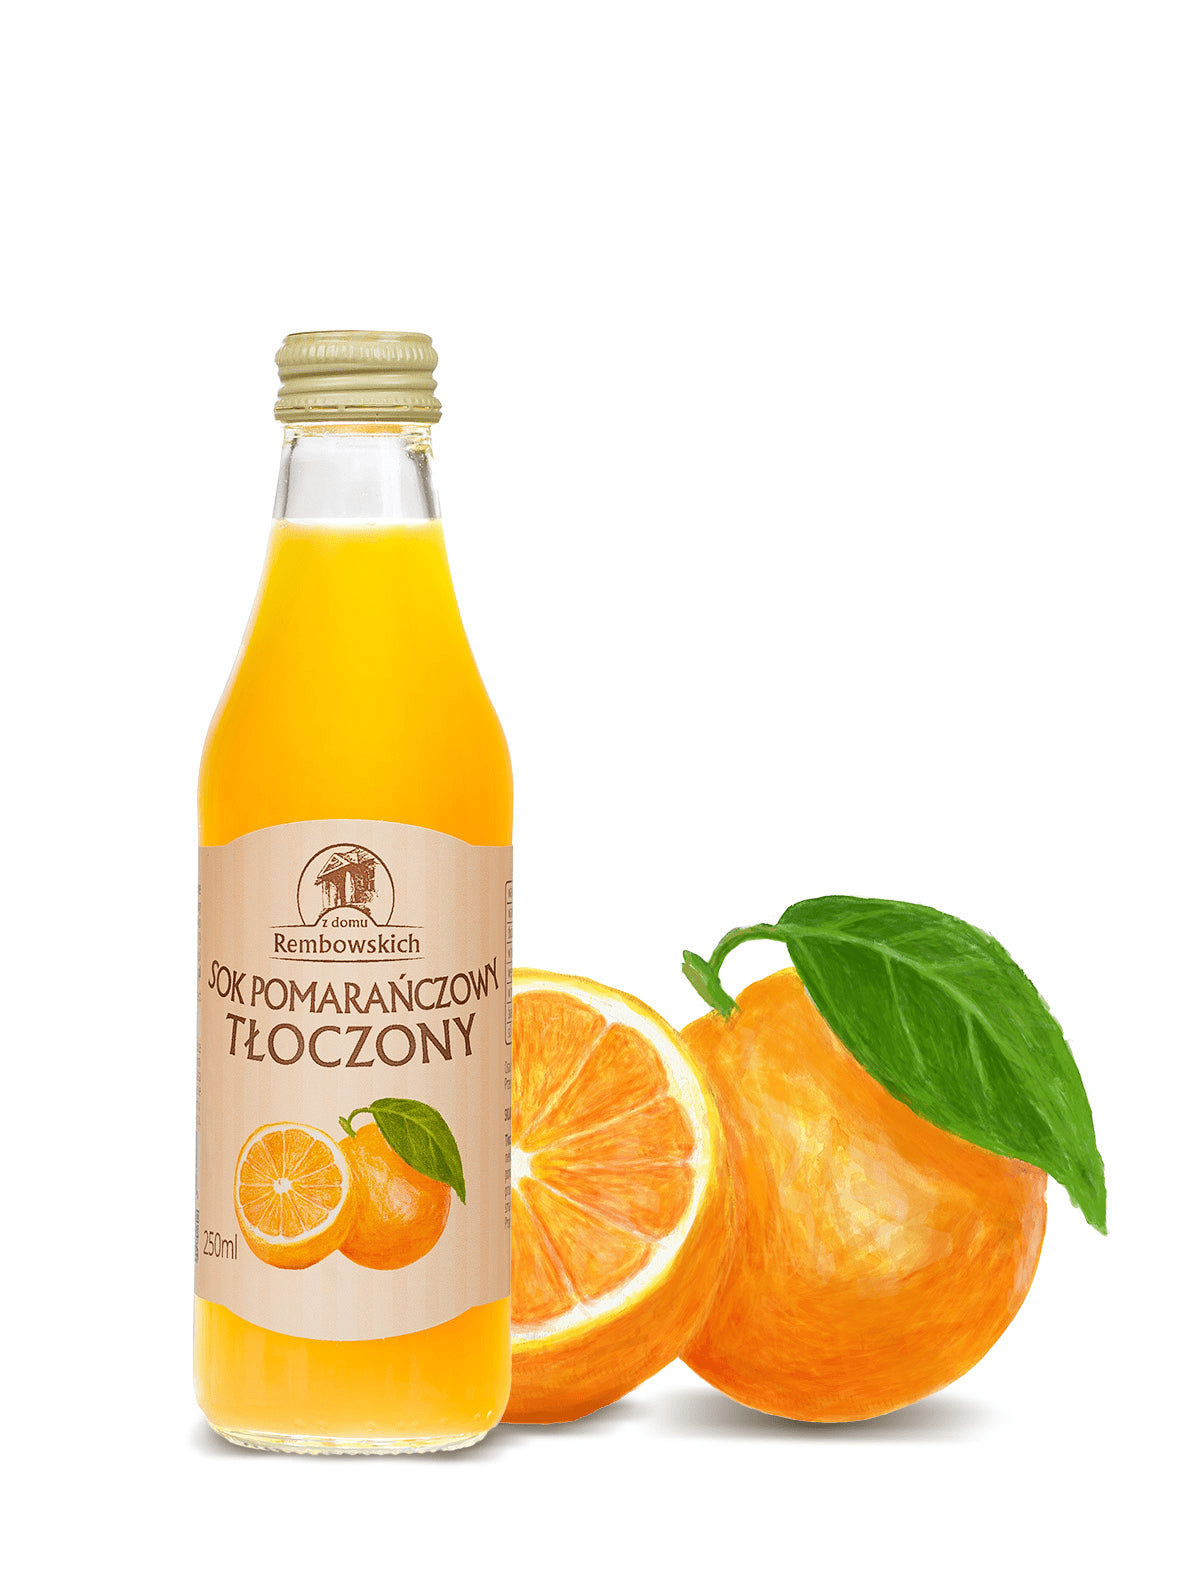 Orange juice 250ml FROM THE REMBOWSKI HOUSE